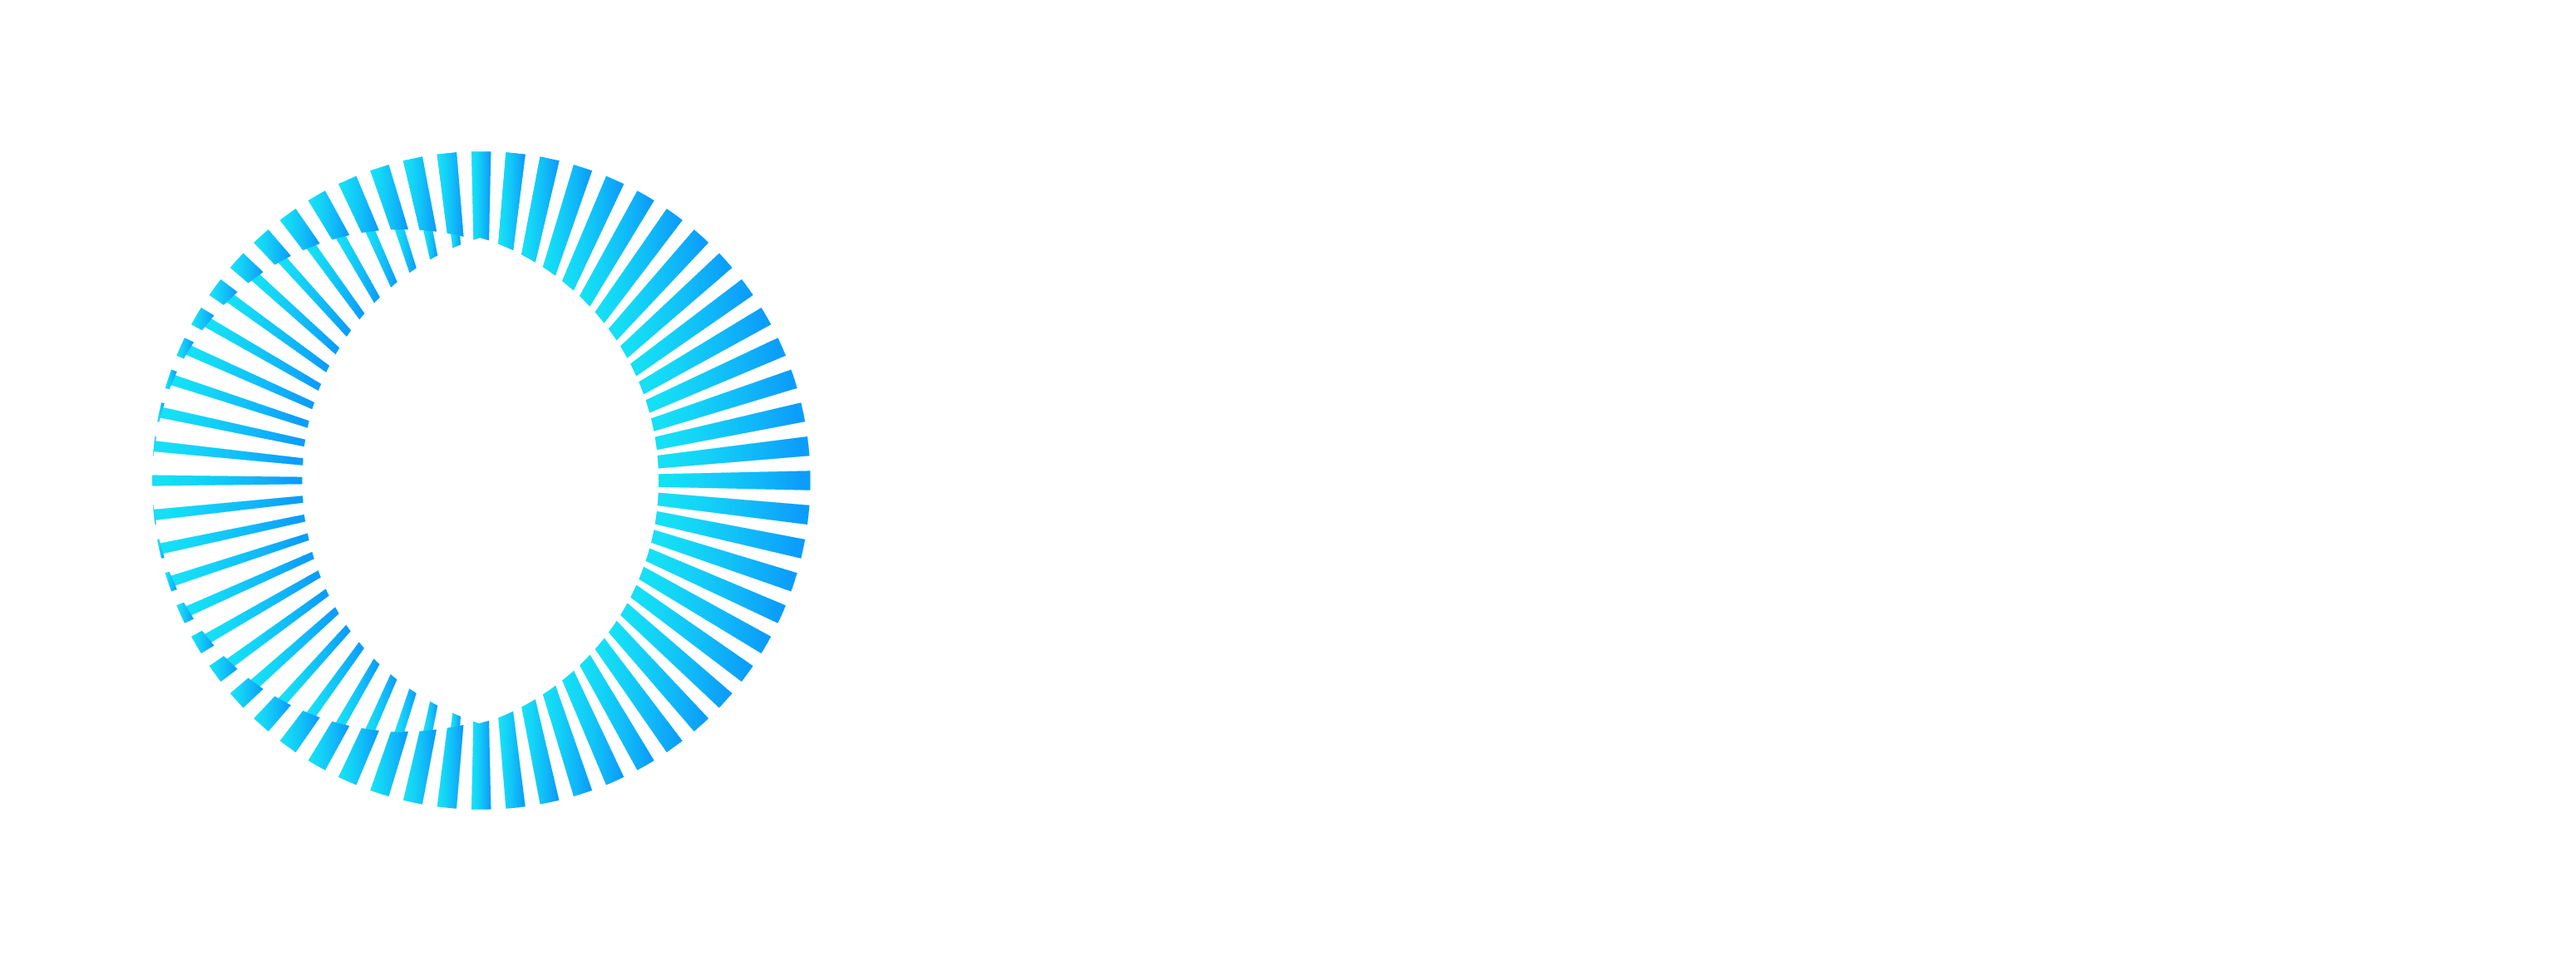 Globalization Partners Logo Horizontal White